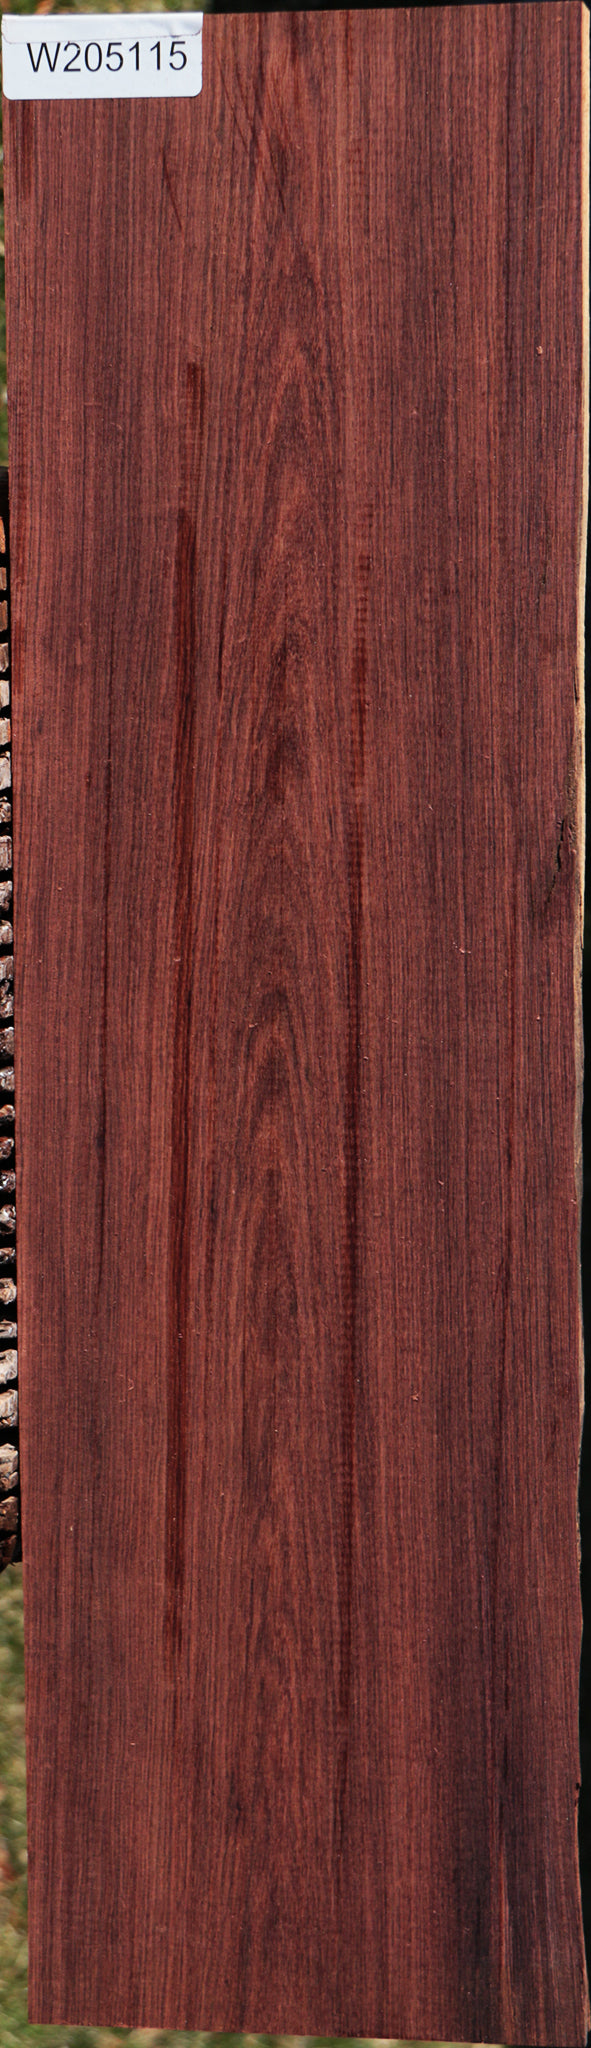 Madagascar Rosewood Lumber